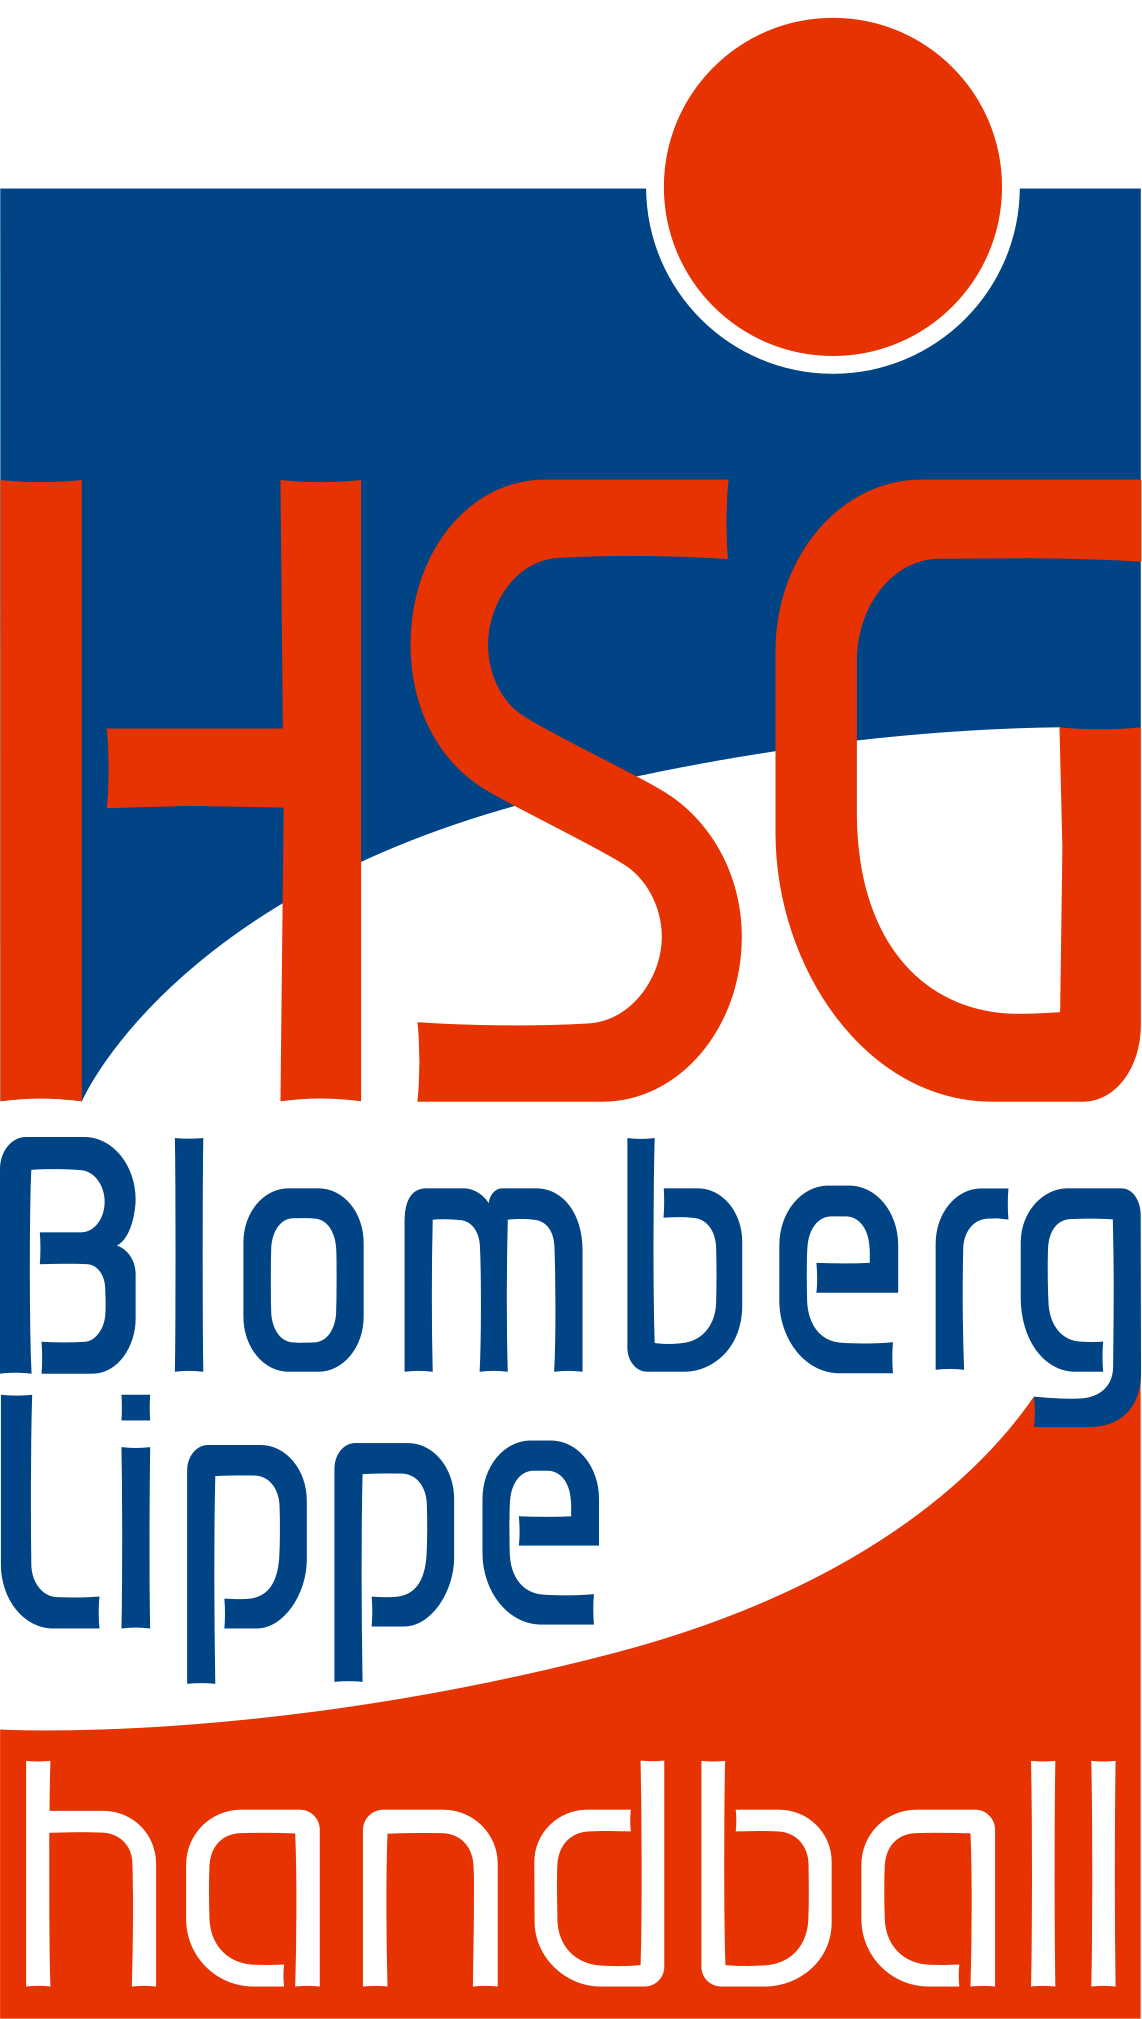 Logo HSG Blomberg-Lippe II